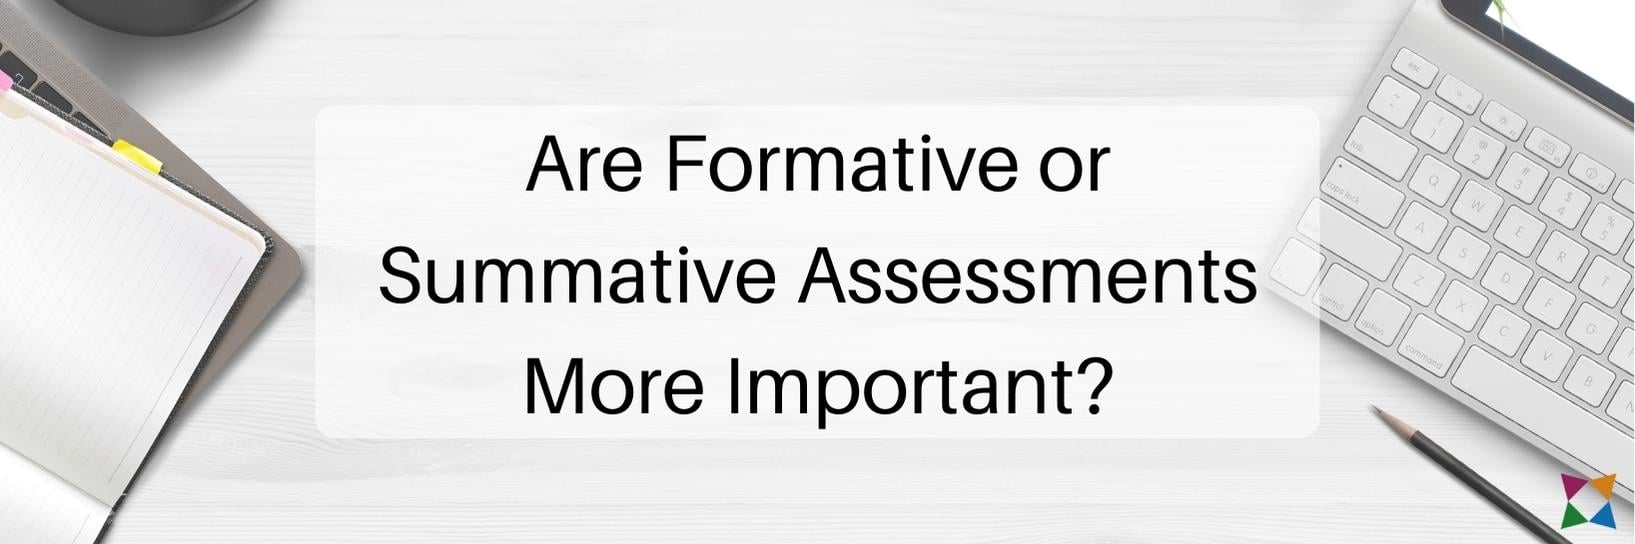 formative-vs-summative-assessments-more-important